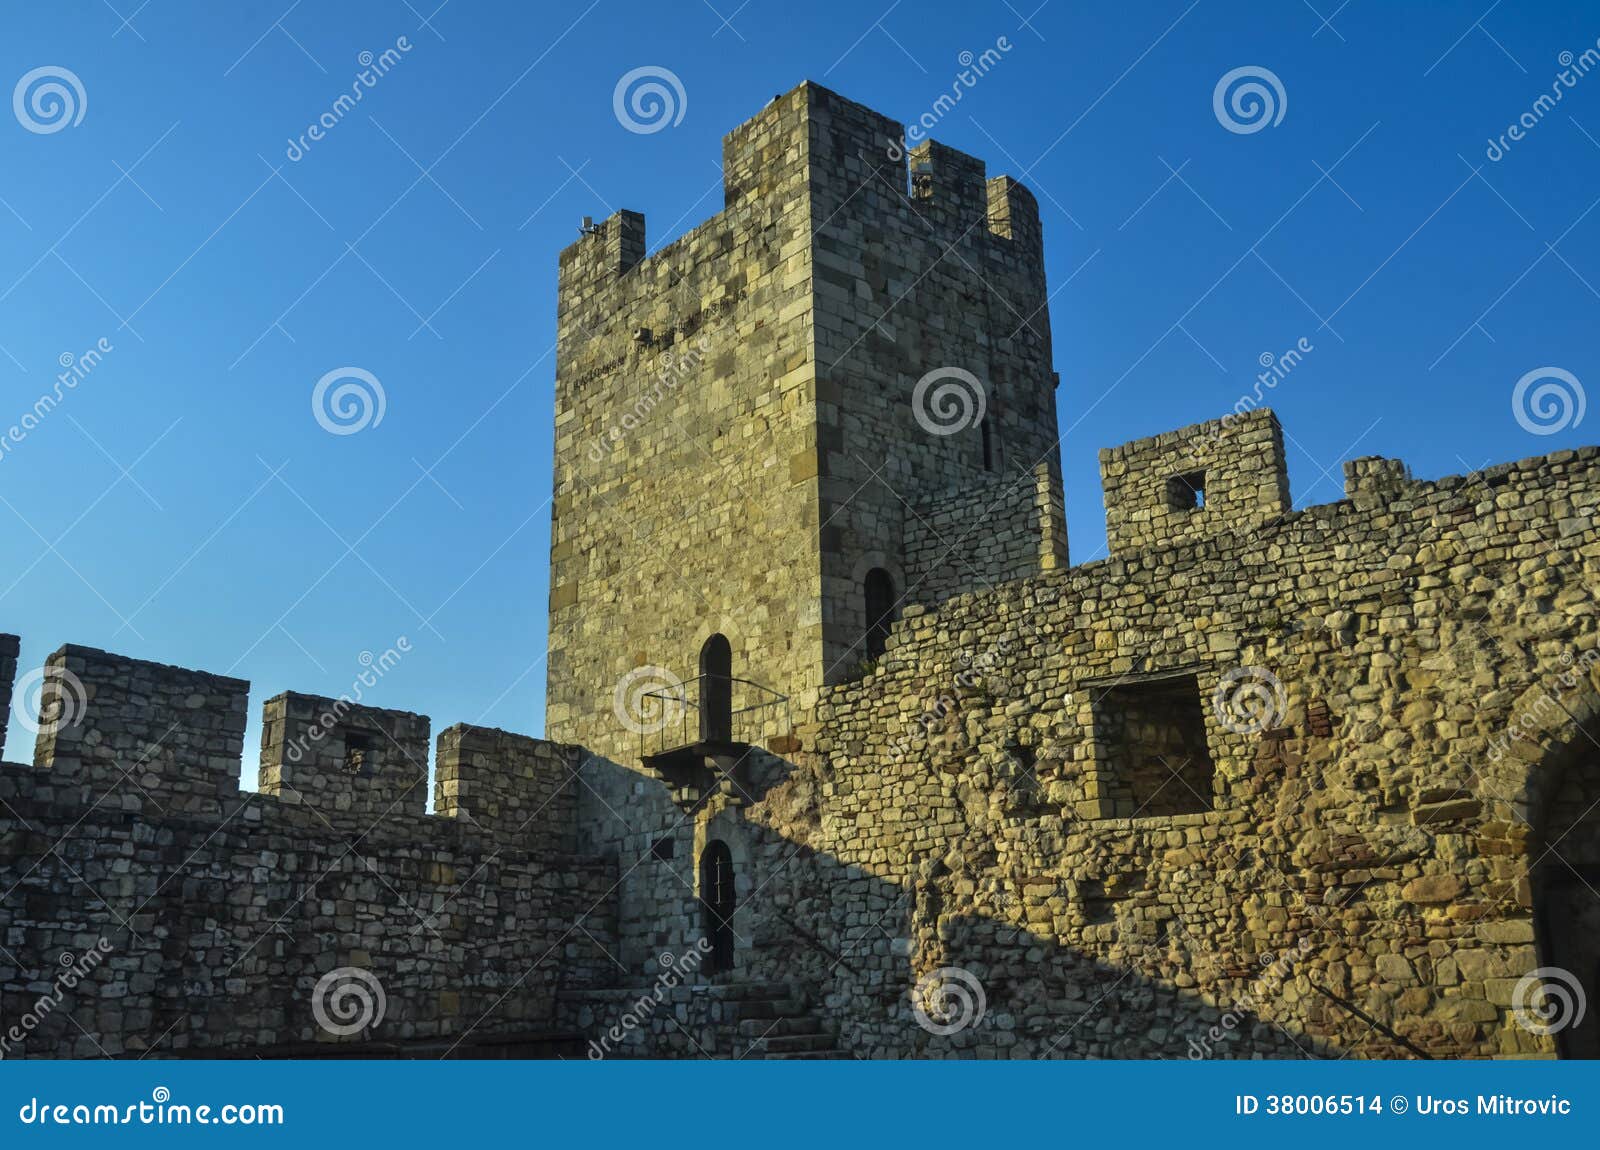 kalemegdan fortress tower